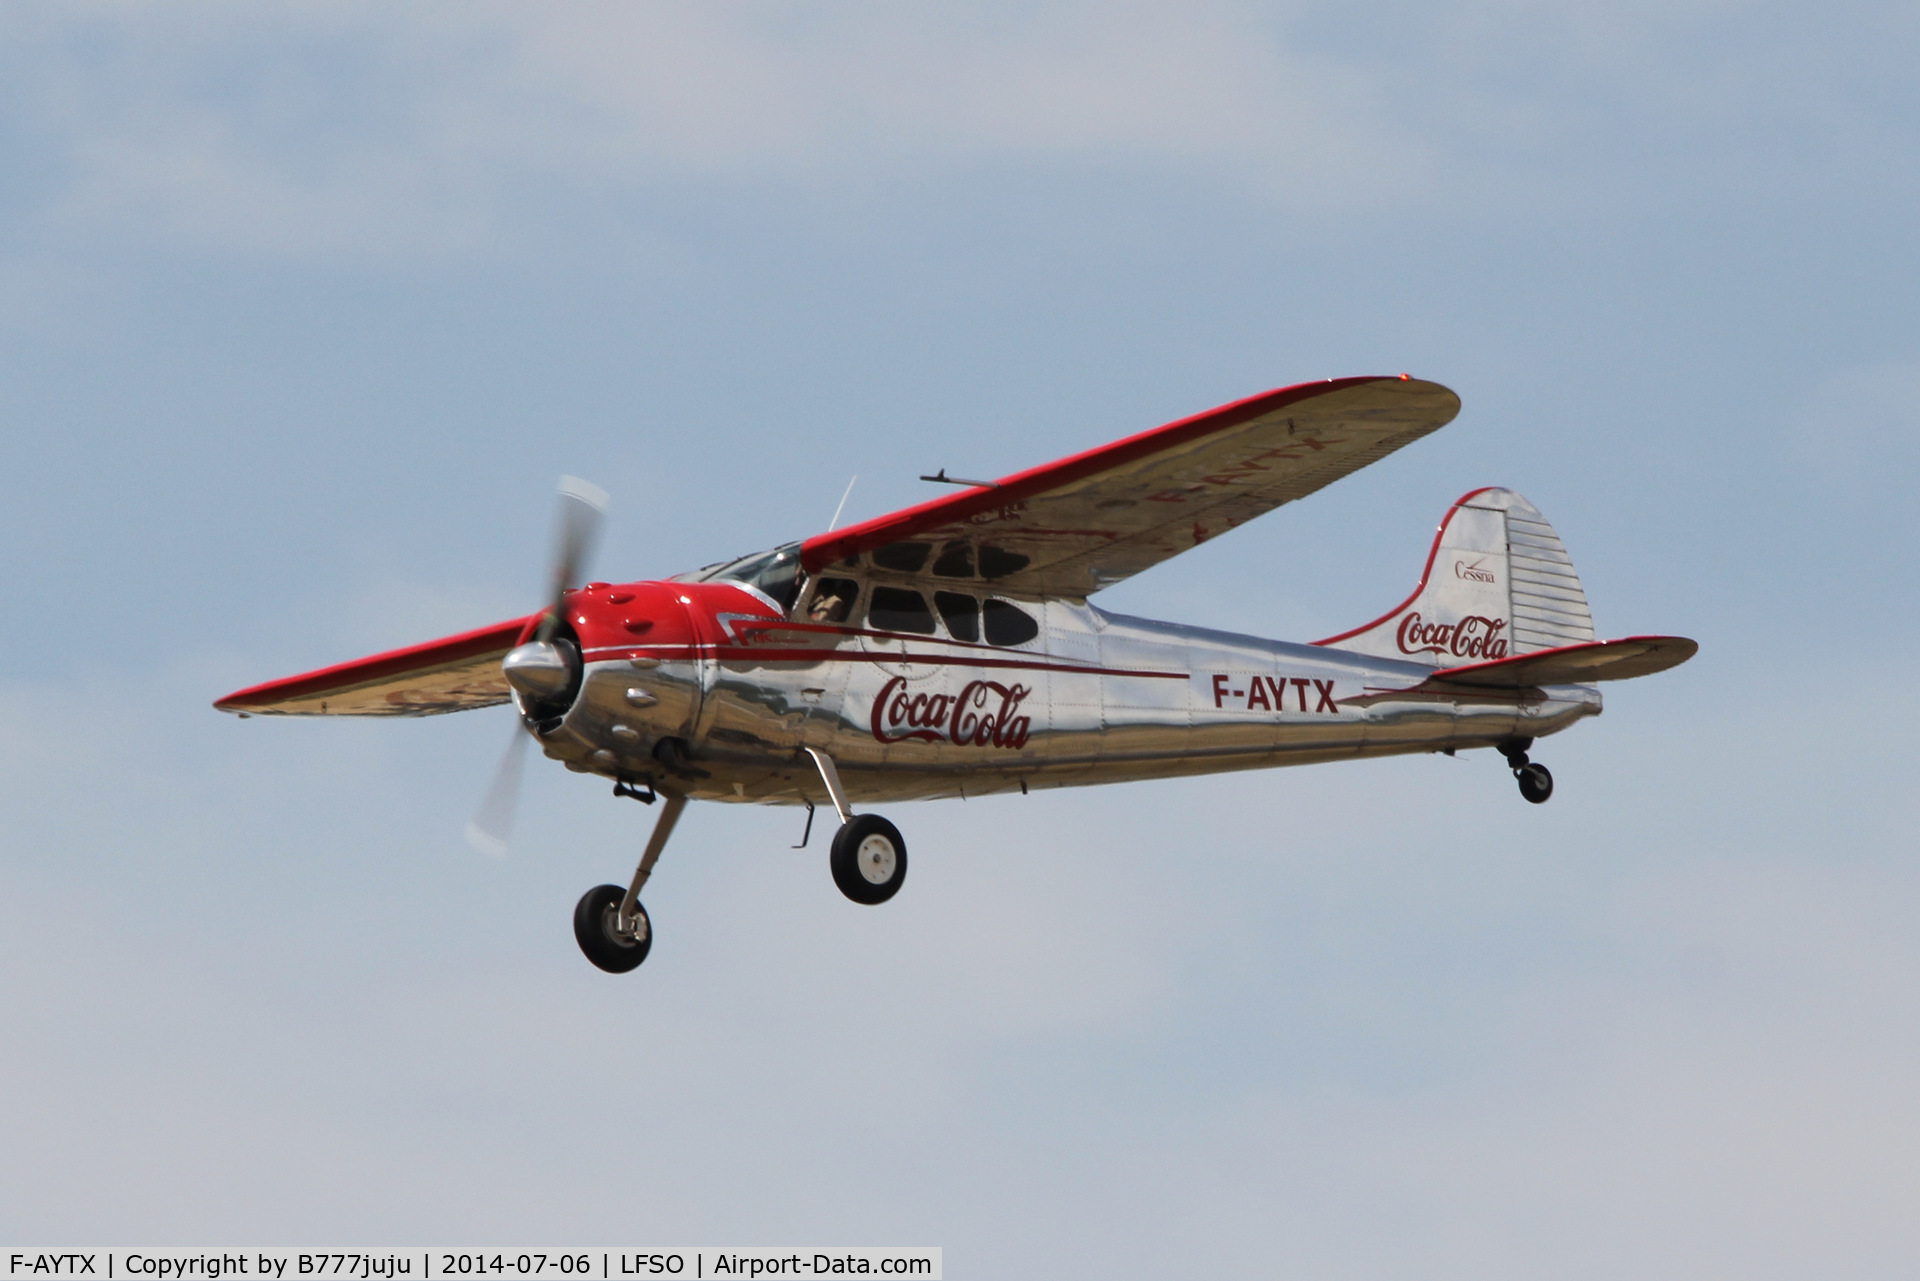 F-AYTX, 1950 Cessna 195 C/N 7496, at Nancy-Ochey